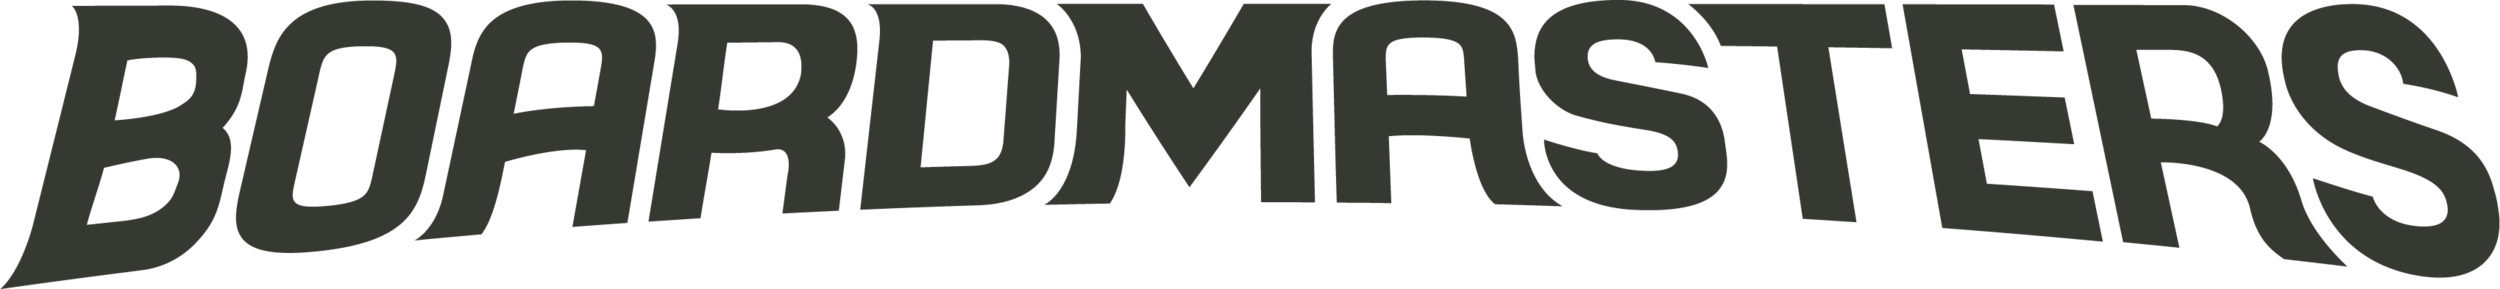 BM18_Logo_Plain_Grey.png